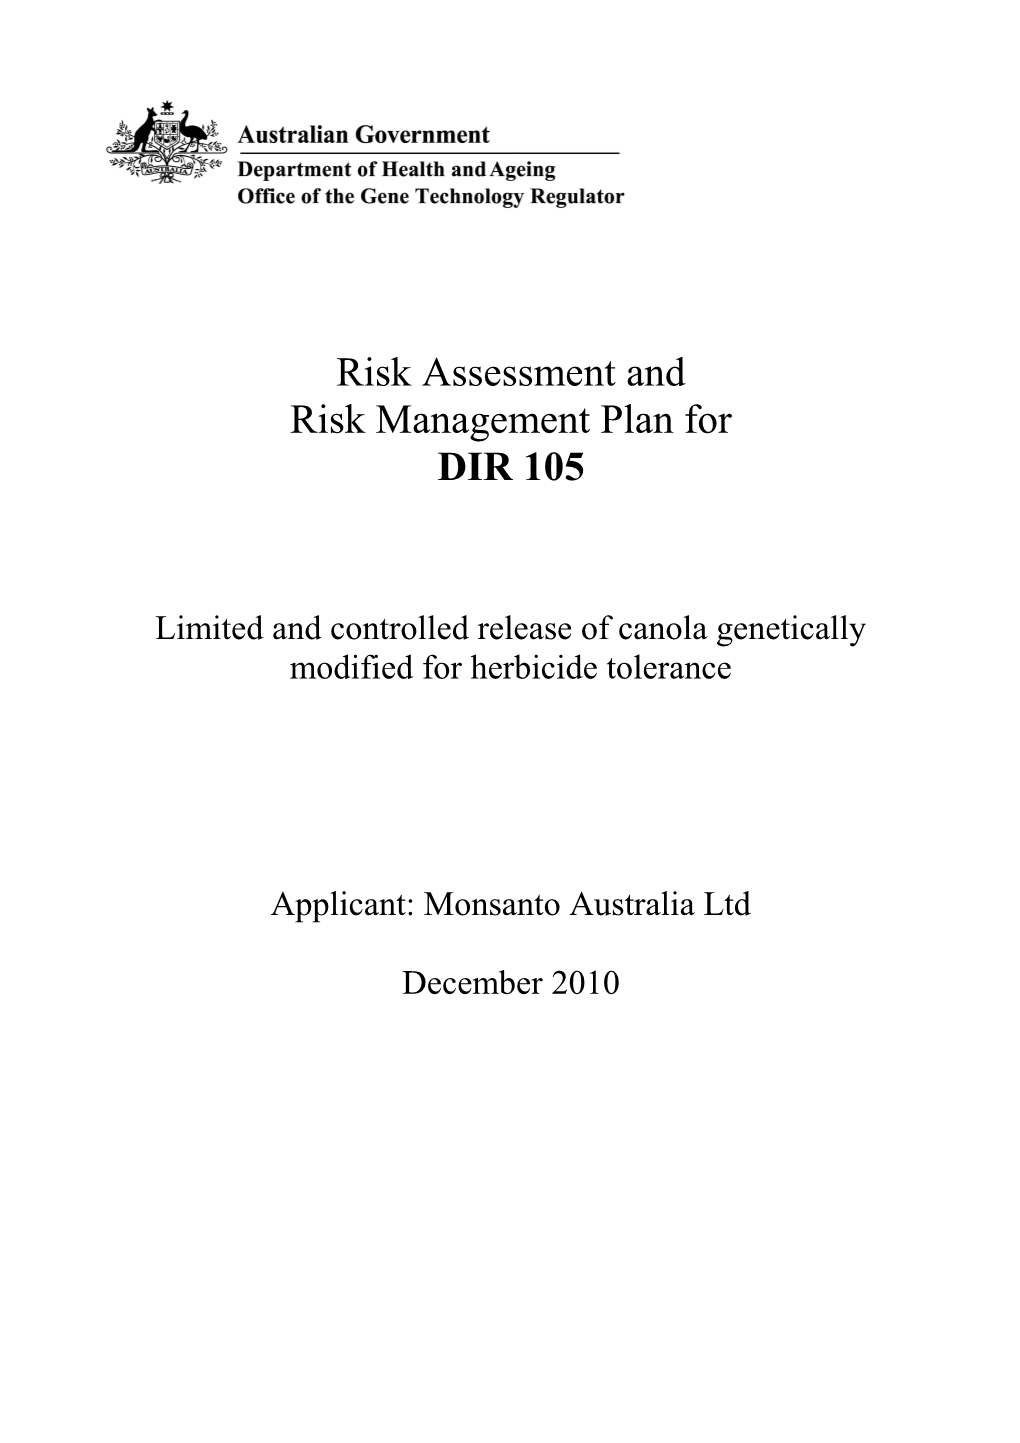 DIR 105 - Risk Assessment and Risk Management Plan